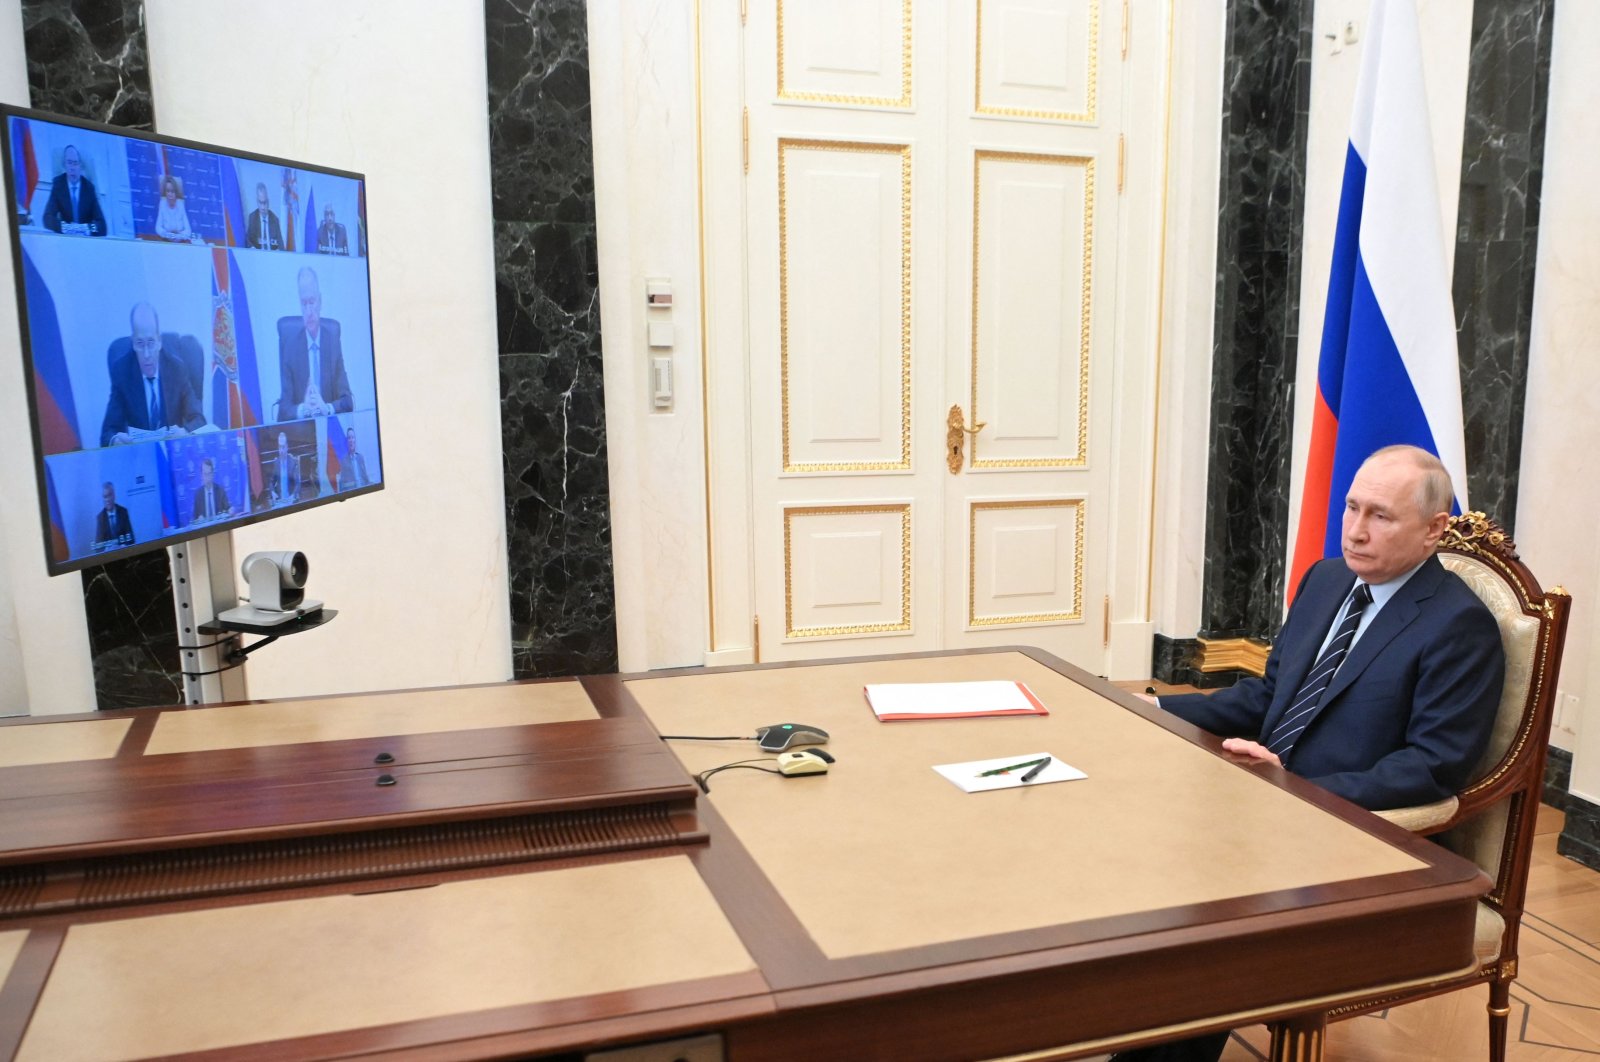 Persyaratan kesepakatan biji-bijian tidak terpenuhi, kata Putin kepada Ramaphosa dari Afrika Selatan